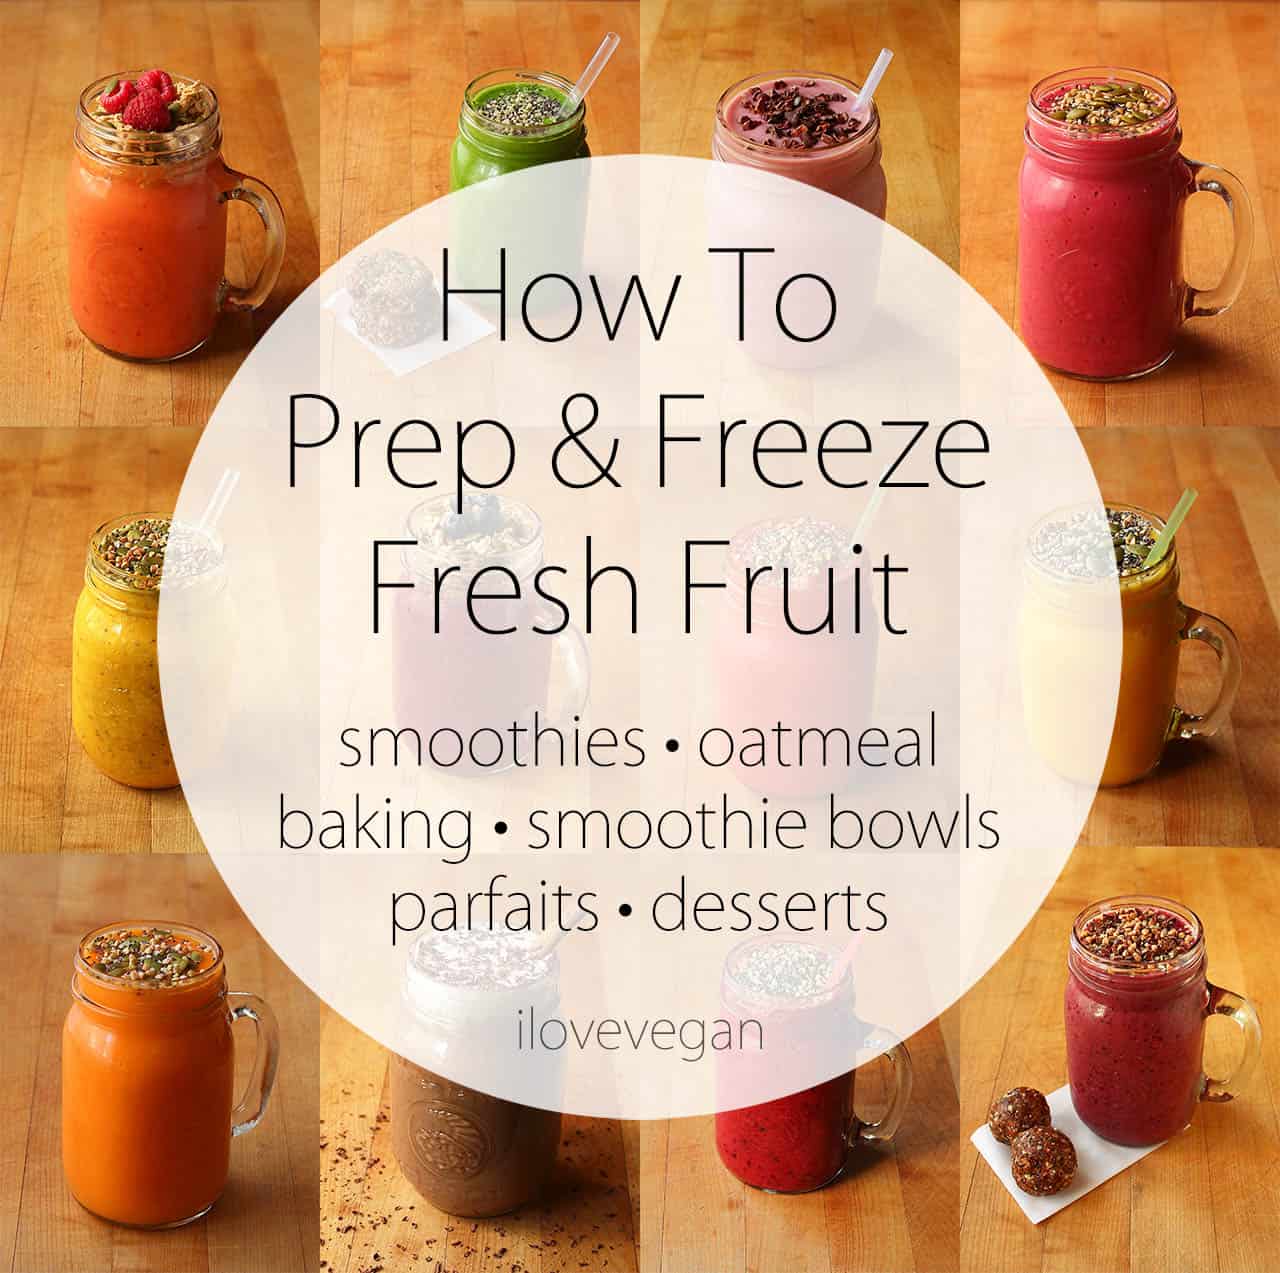 https://ilovevegan.com/wp-content/uploads/2013/07/how-to-prep-and-freeze-fresh-fruit.jpg